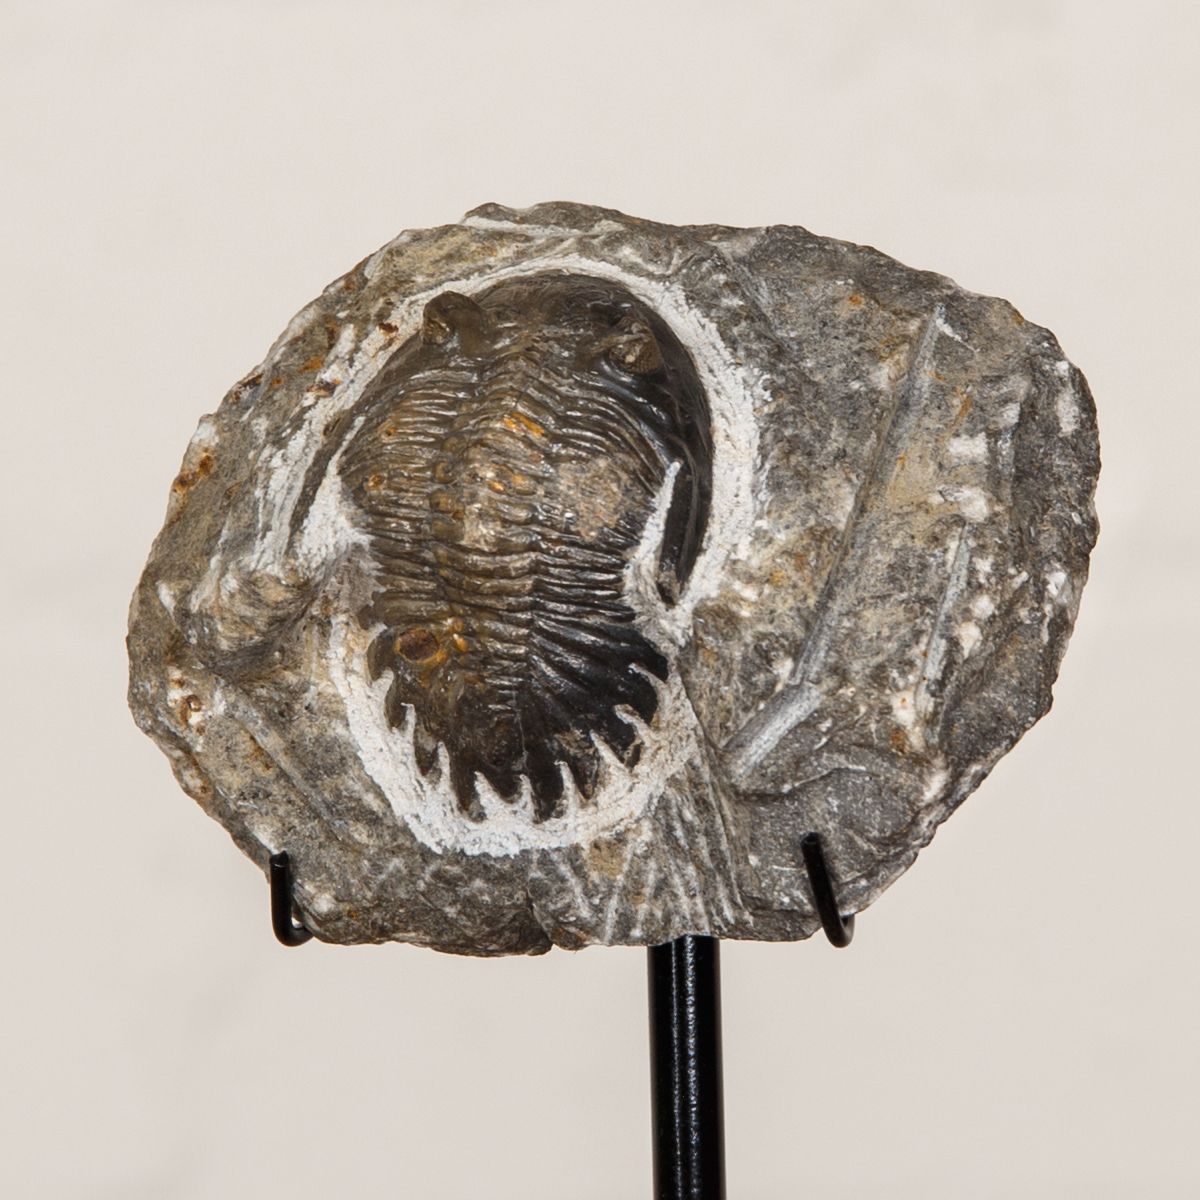 Hollardops Trilobite with Matrix on Stand (Hollardops sp)